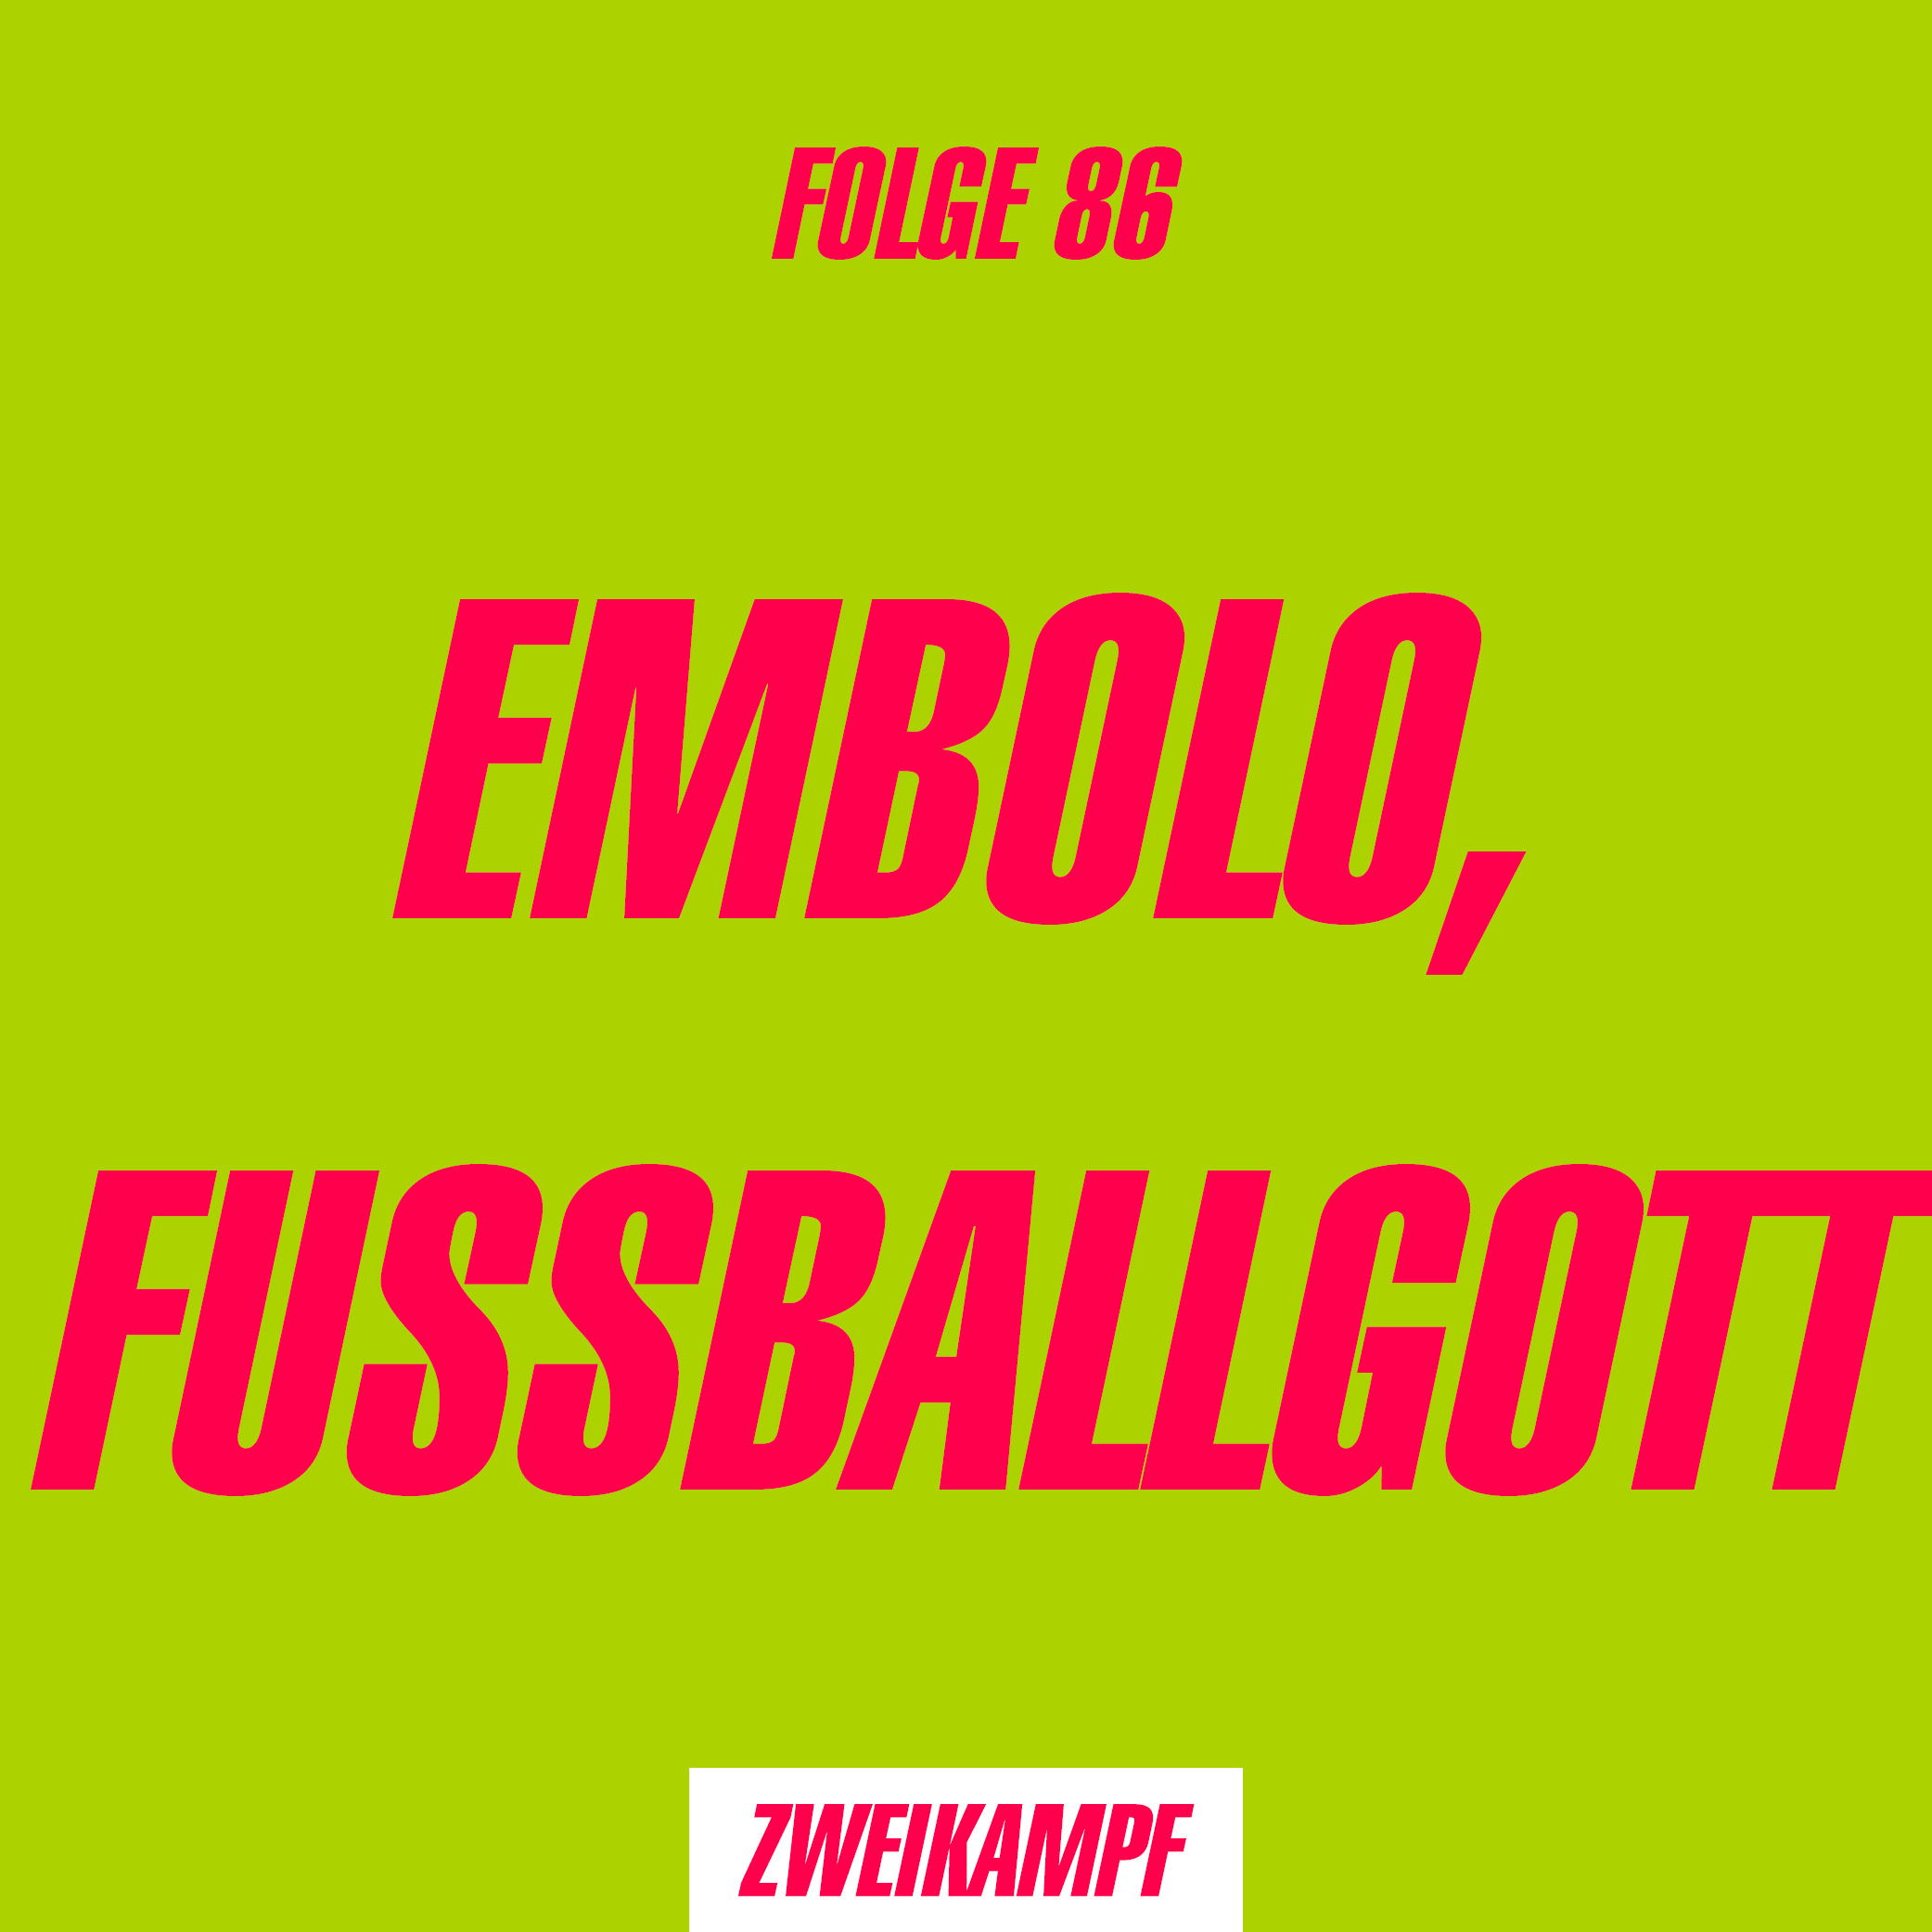 Folge 86: Embolo, Fussballgott